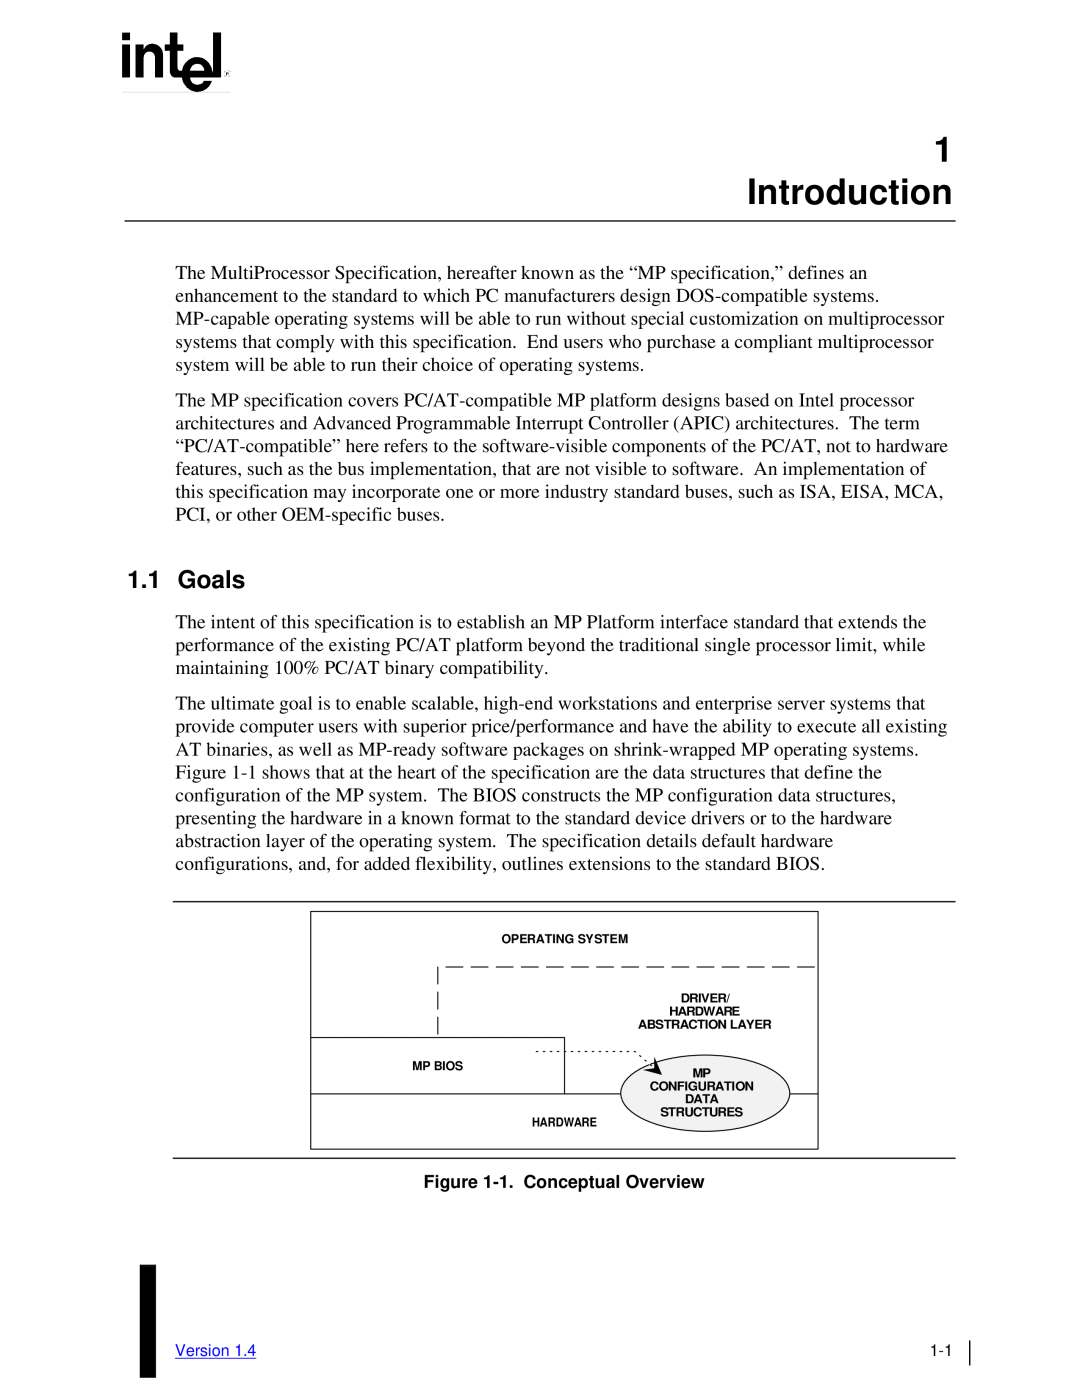 Intel MultiProcessor manual Introduction, Goals 